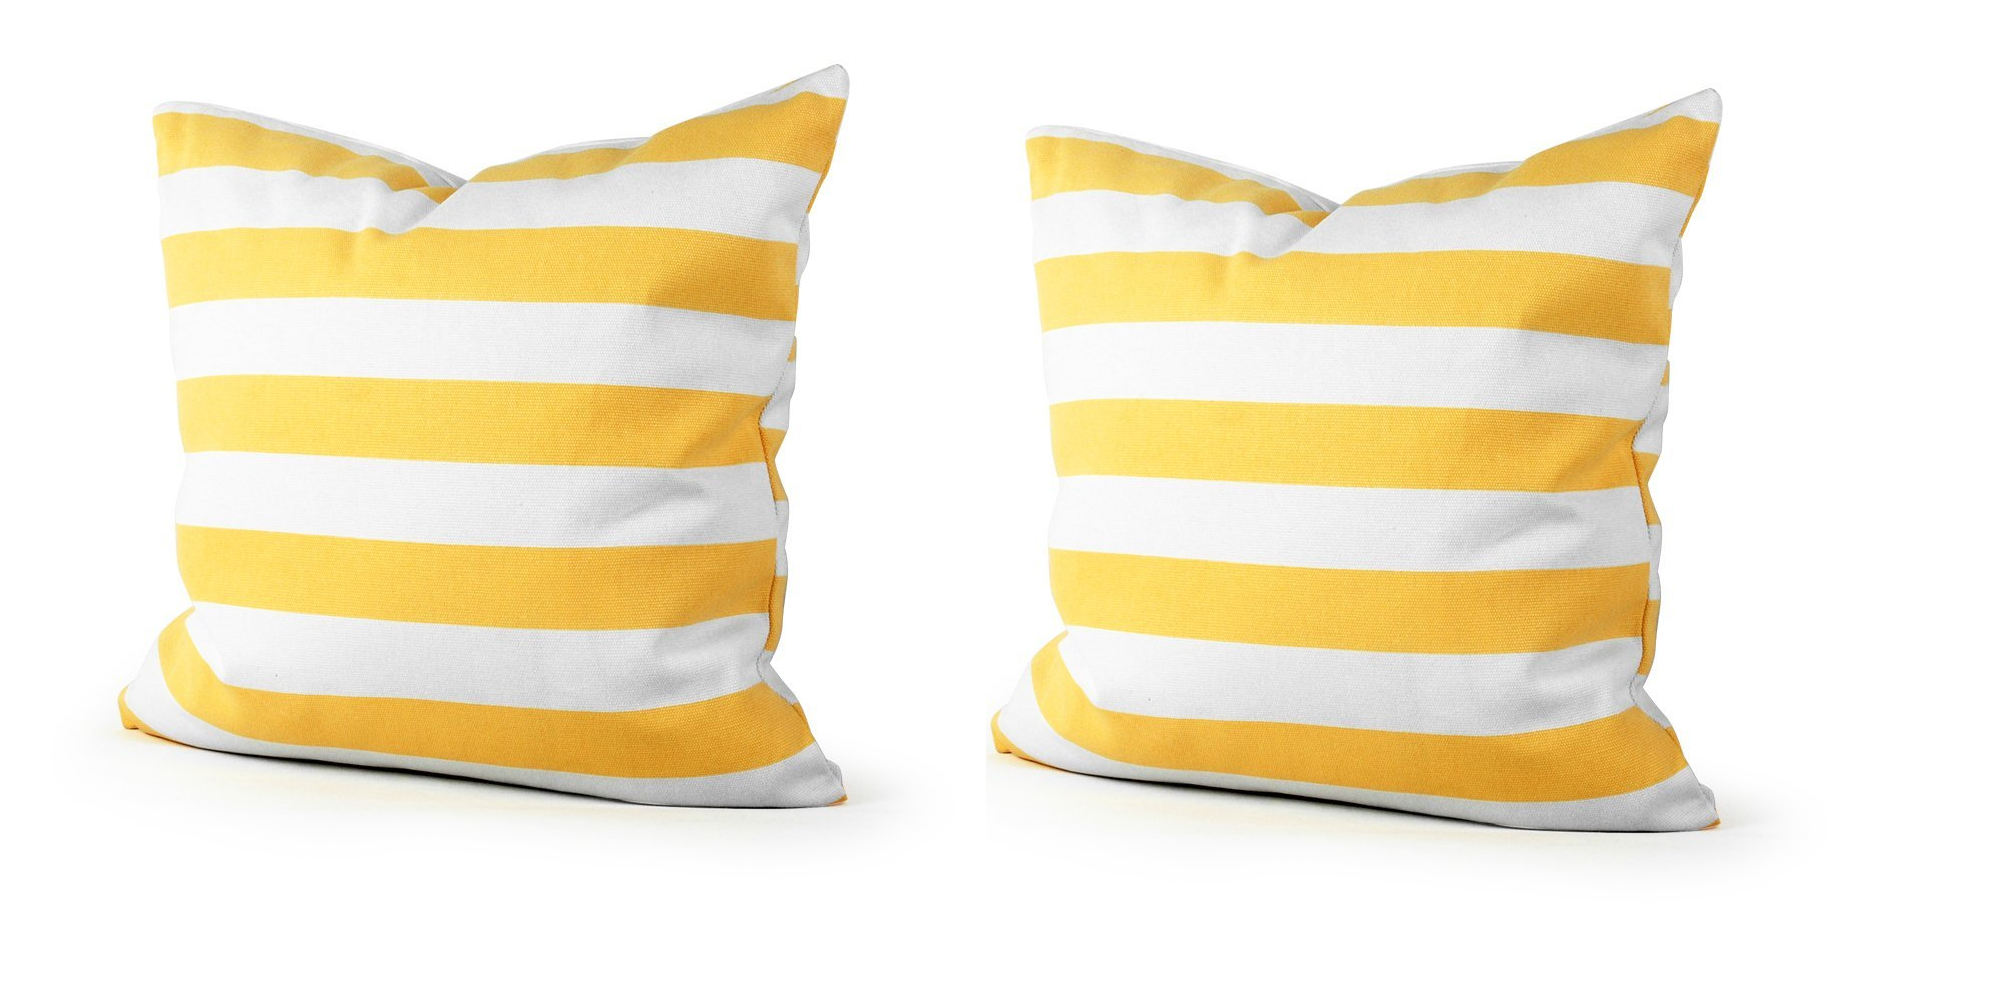 Yellow Stripe Throw Pillow Case Only $1.19 Shipped!